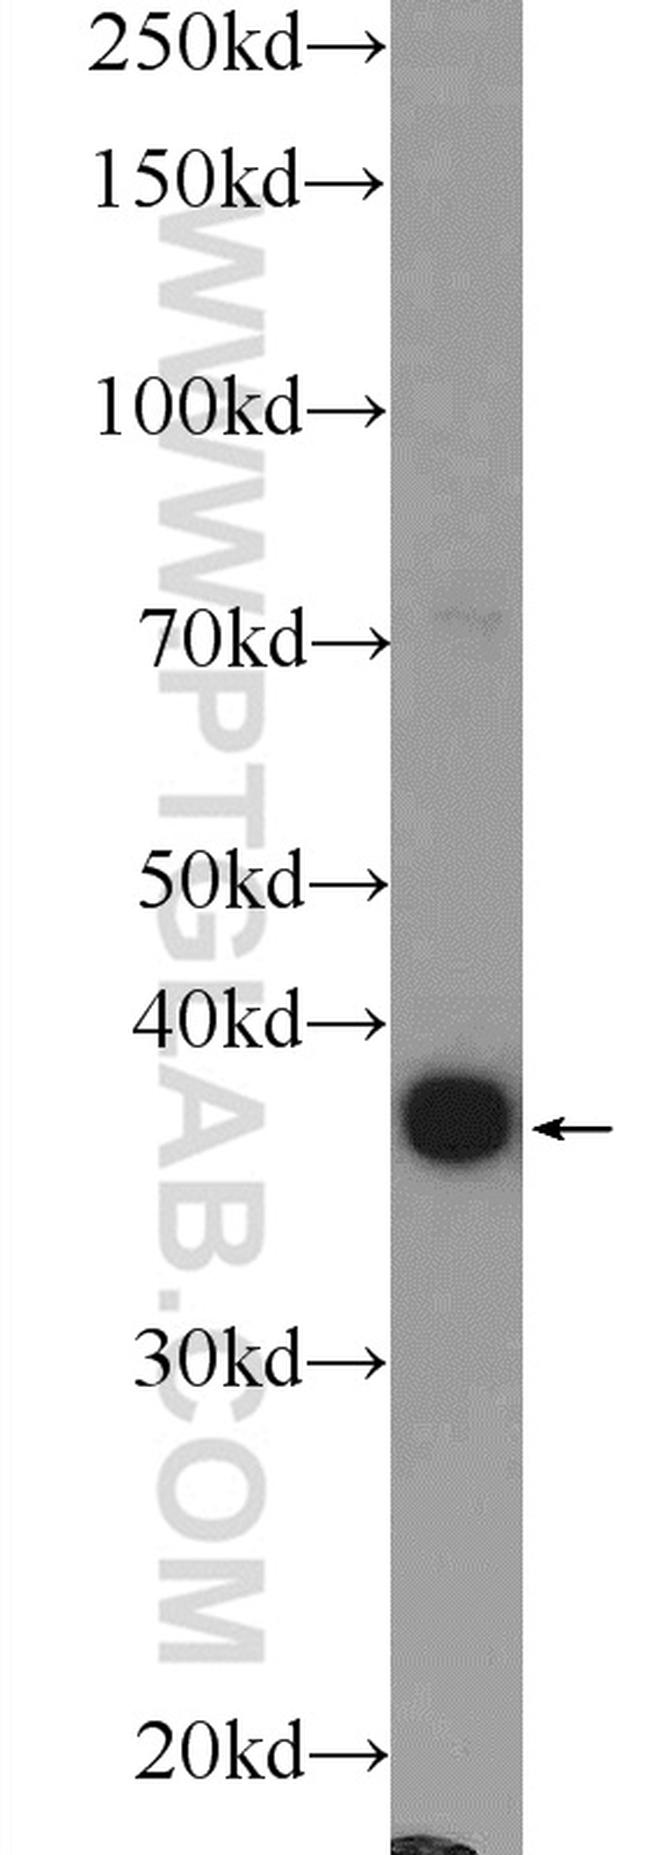 SPATA22 Antibody in Western Blot (WB)